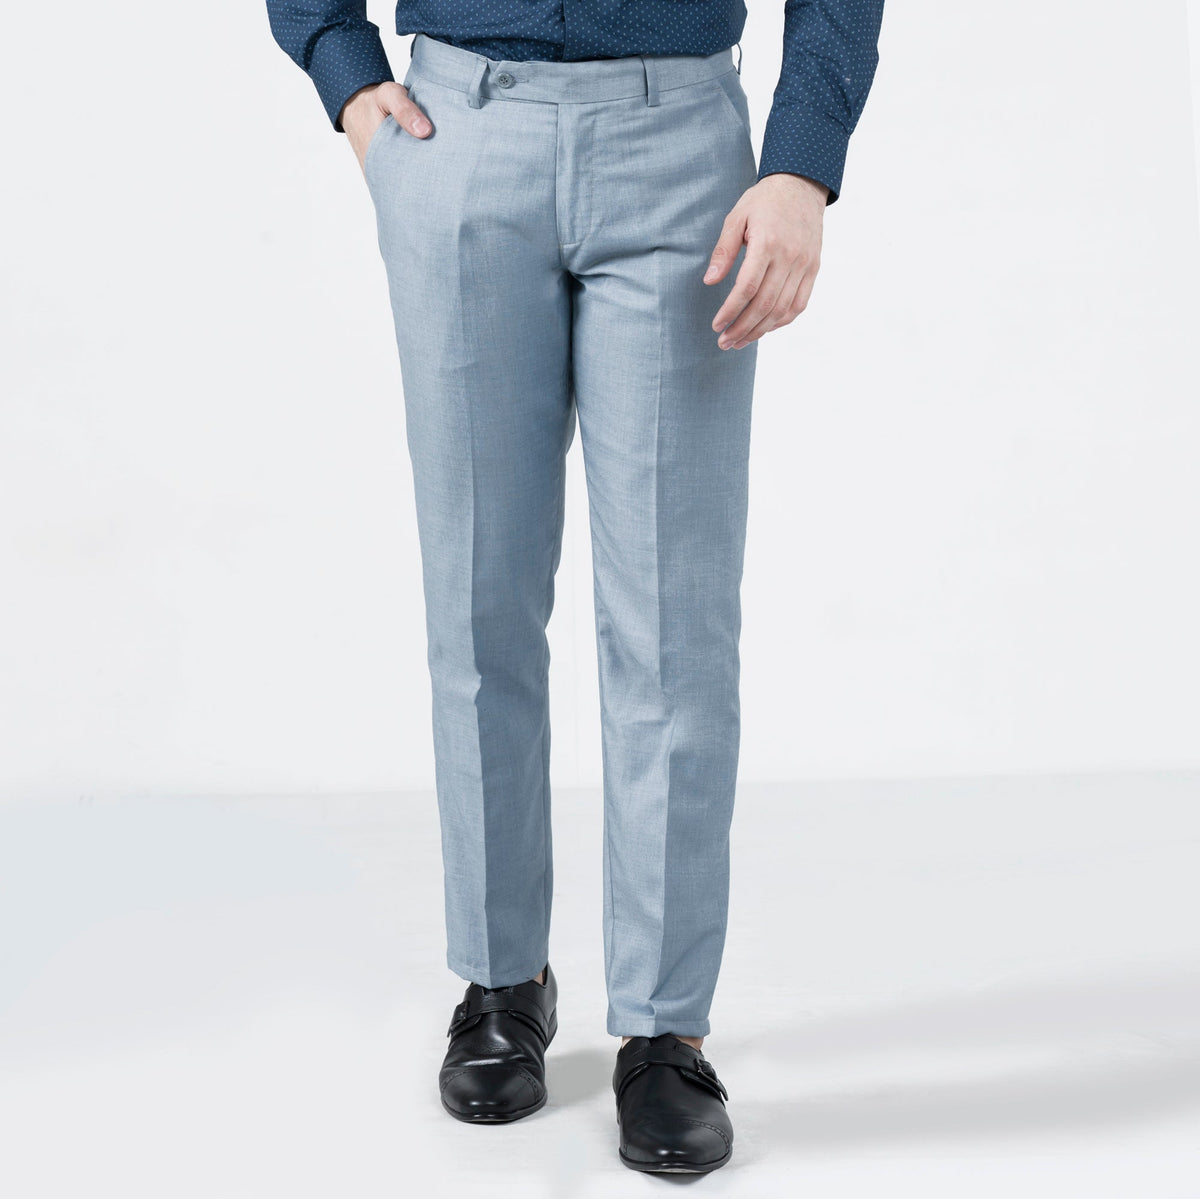 Buy Ash Grey Trousers  Pants for Men by DJ  C Online  Ajiocom